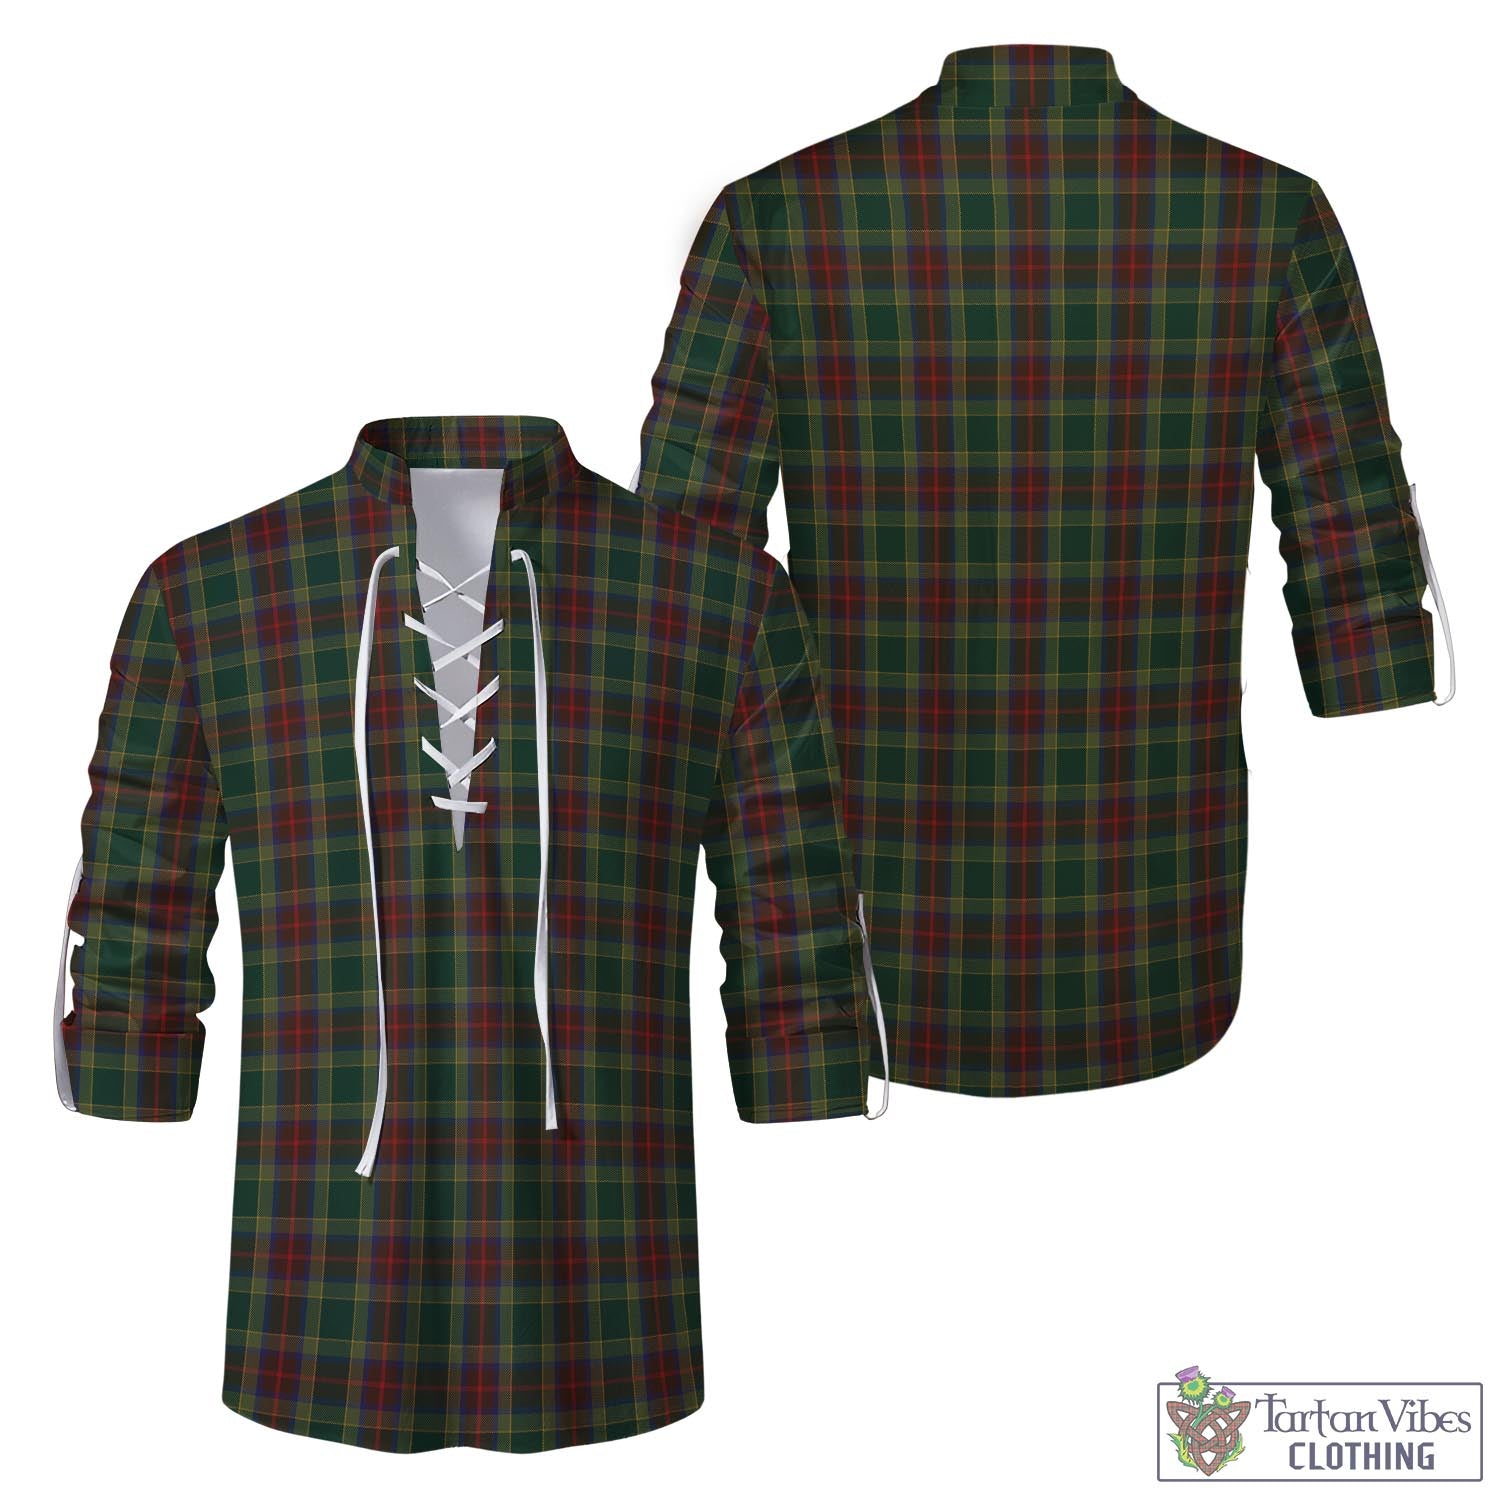 Tartan Vibes Clothing Waterford County Ireland Tartan Men's Scottish Traditional Jacobite Ghillie Kilt Shirt